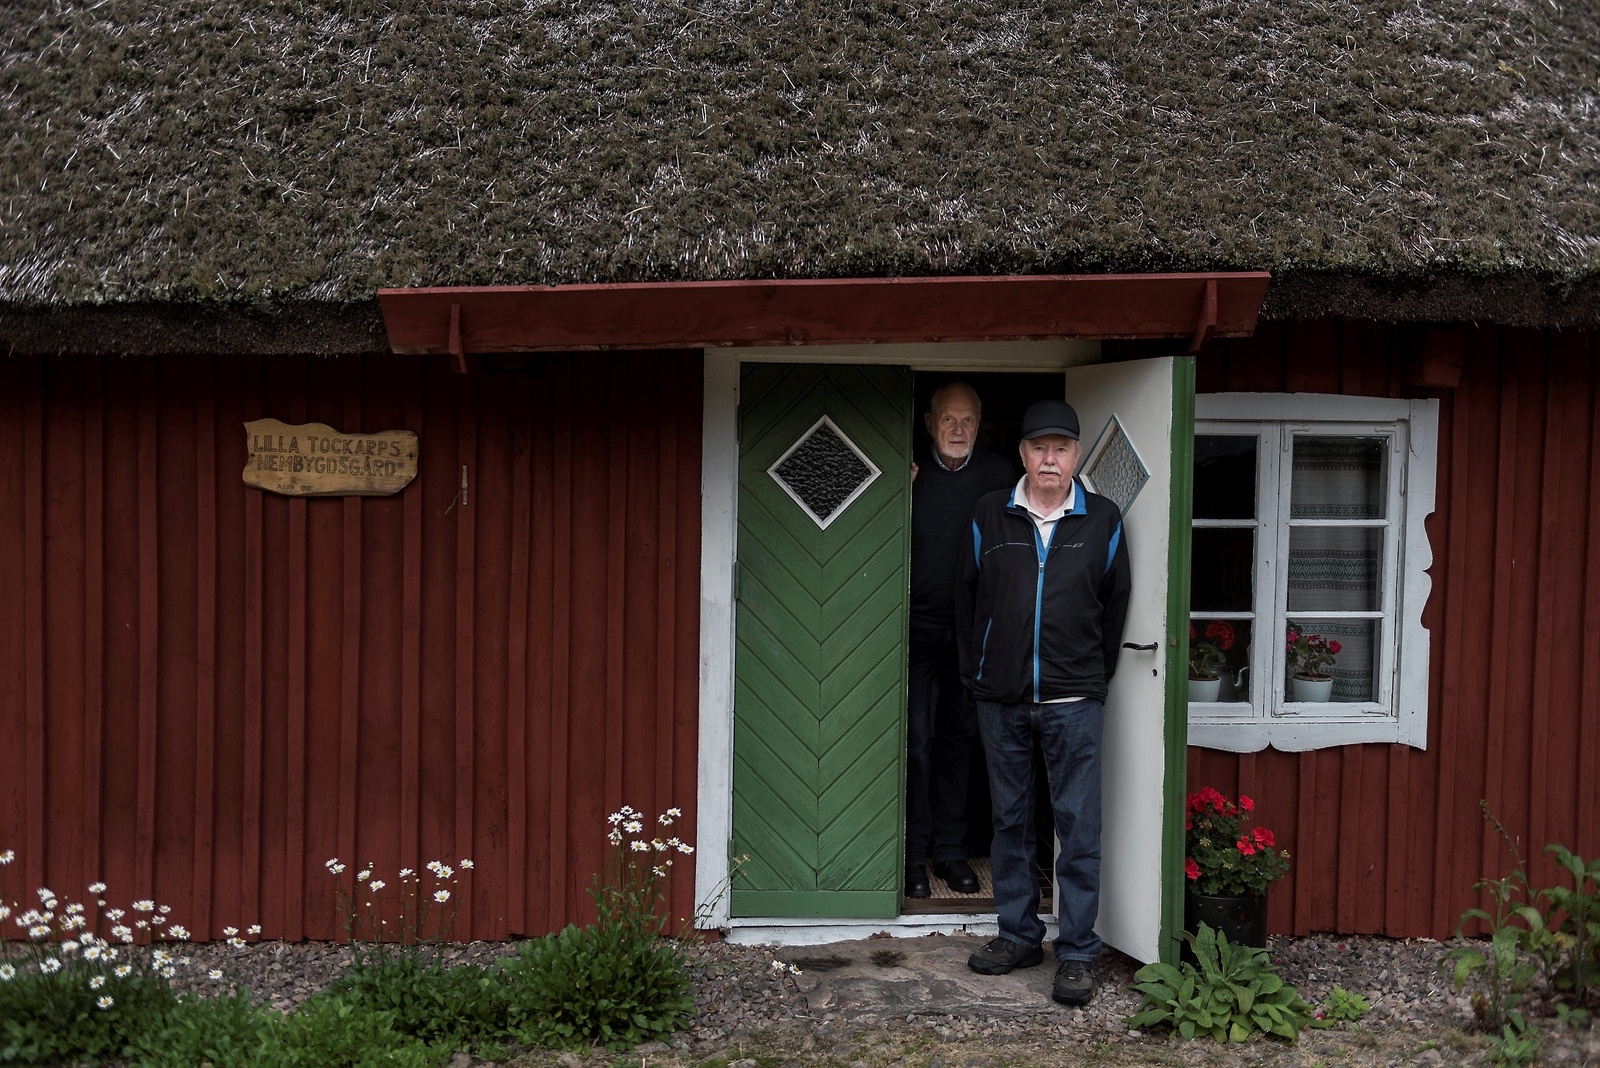 Arne Elowson och Gert Lindquist i hembygdsgården i Lilla Tockarp.Foto: Sofia Åström